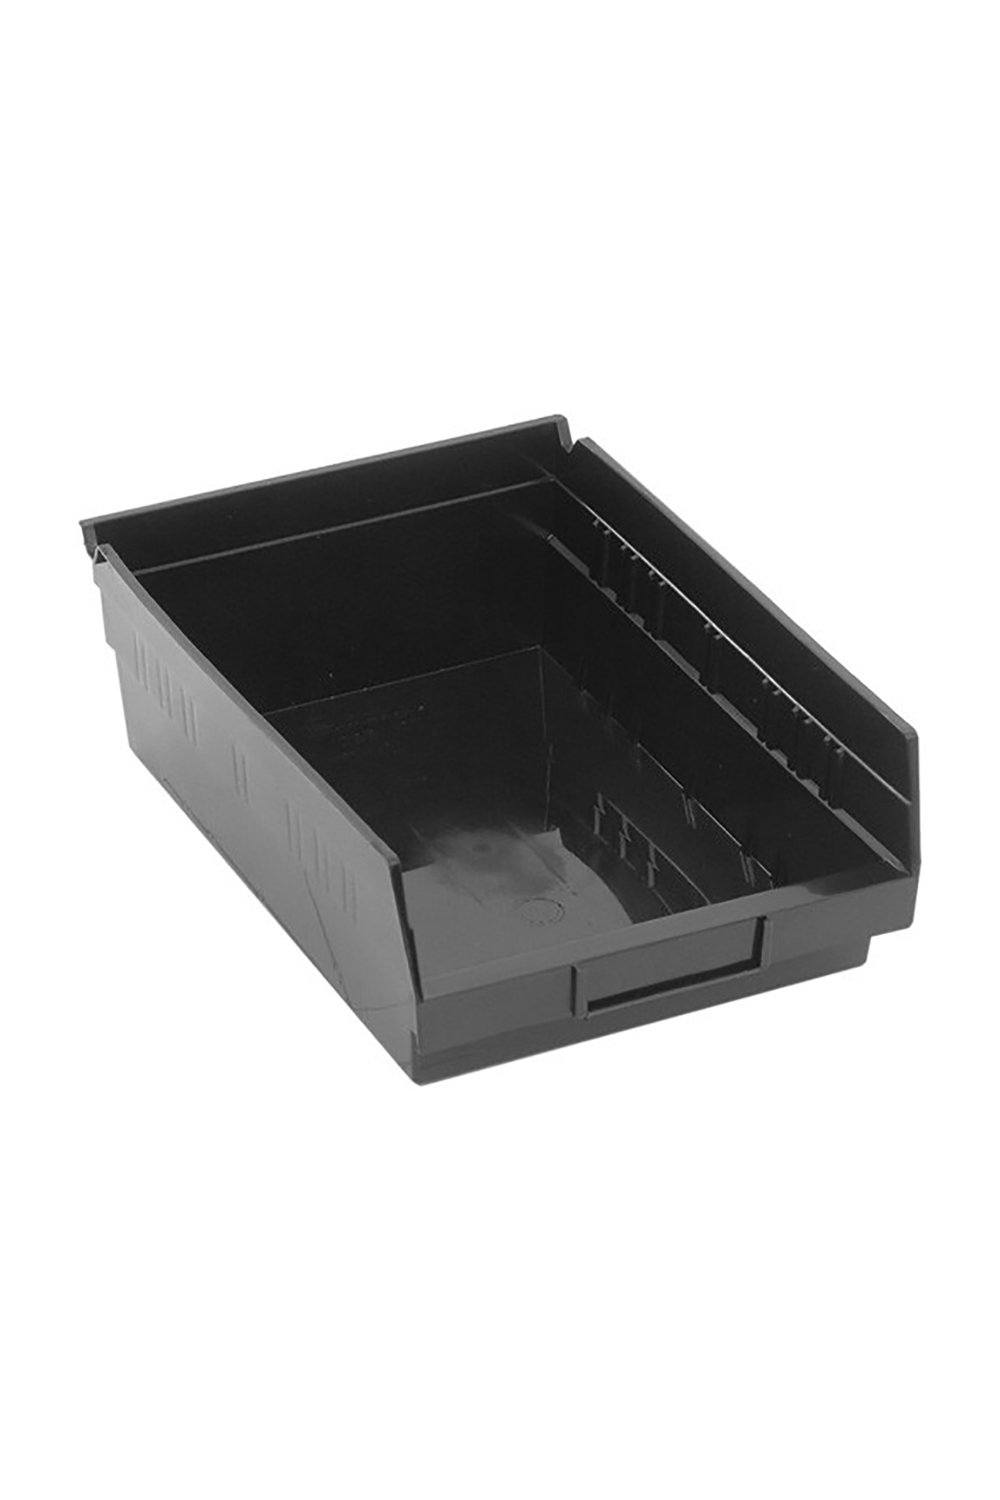 Recycled Shelf Bin Bins & Containers Acart 11-5/8'' x 8-3/8'' x 4'' Black 